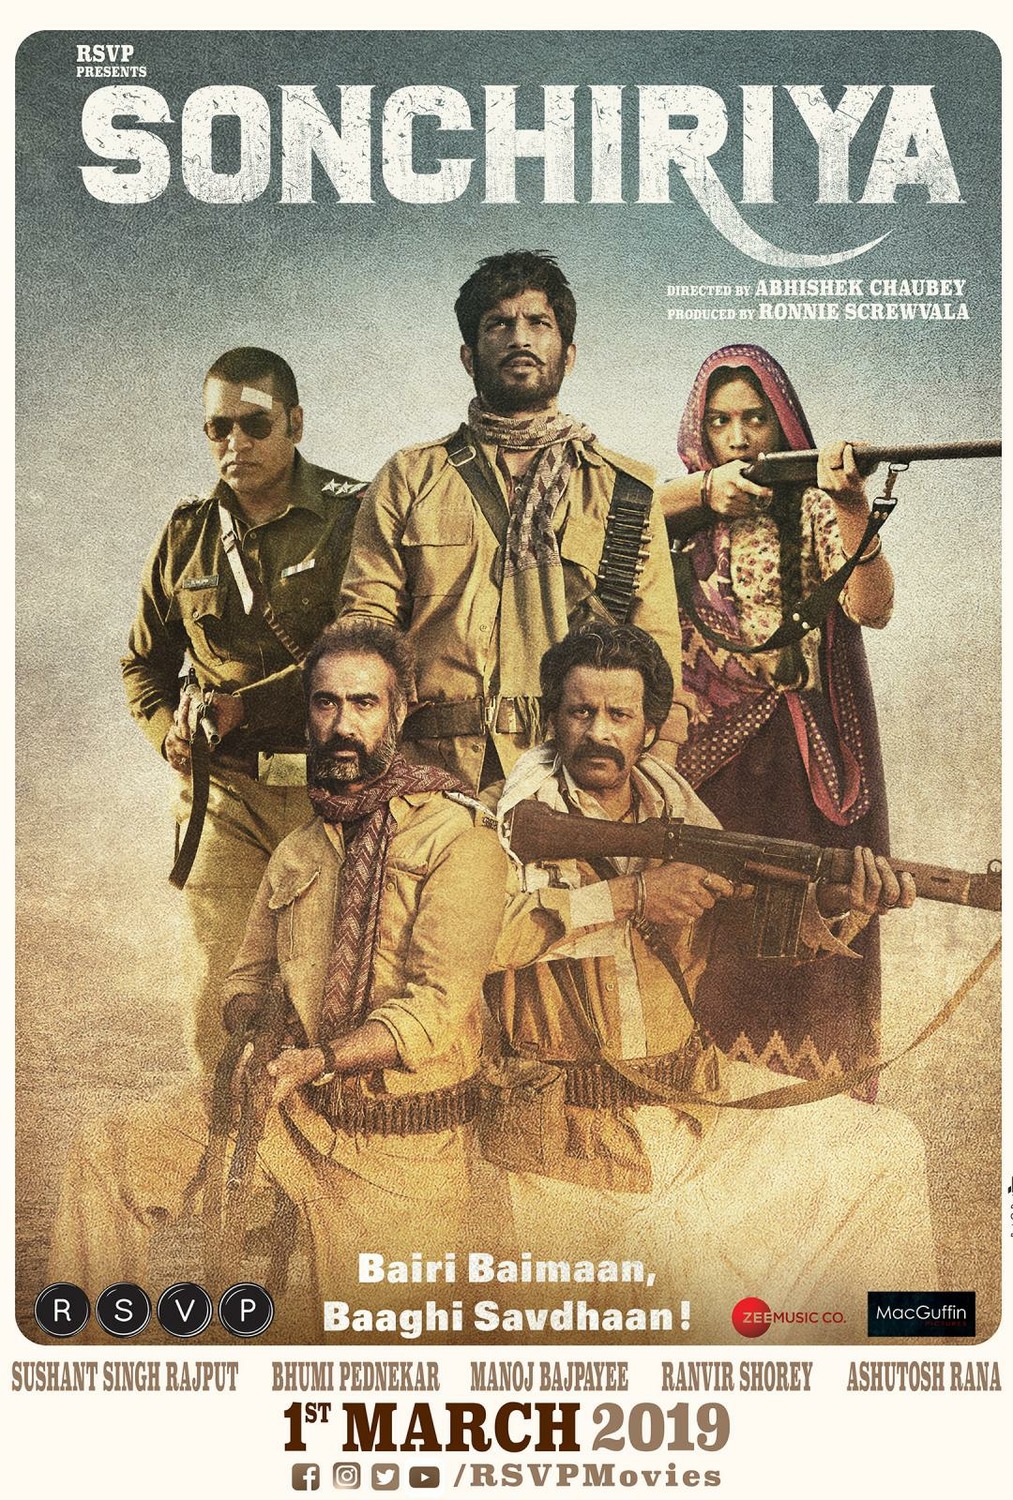 Extra Large Movie Poster Image for Sonchiriya 